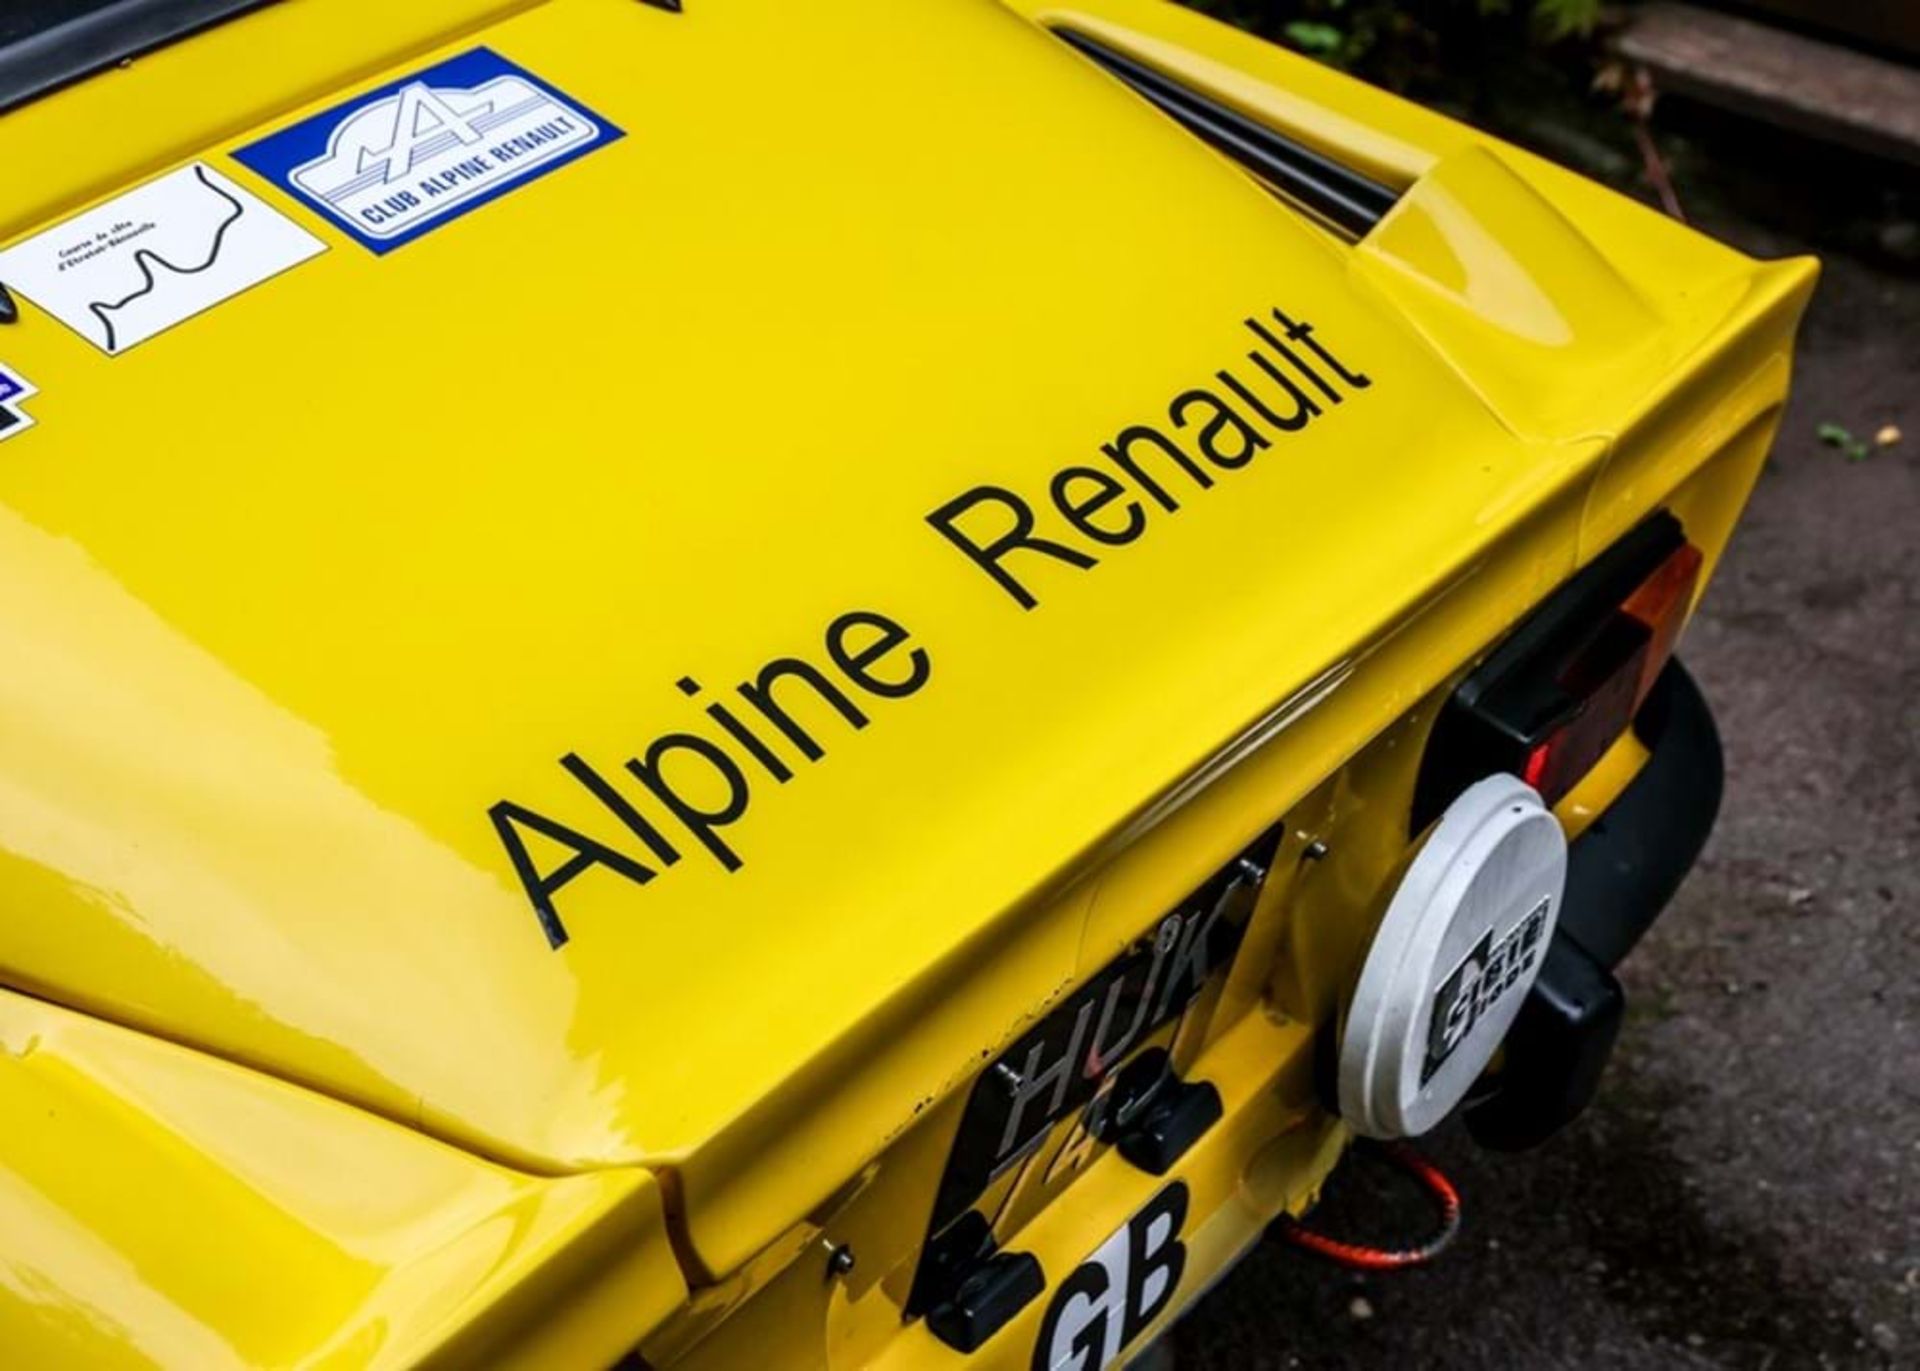 1971 Alpine A110-1647, Rally, Sprint and Hillclimb car - Image 2 of 10